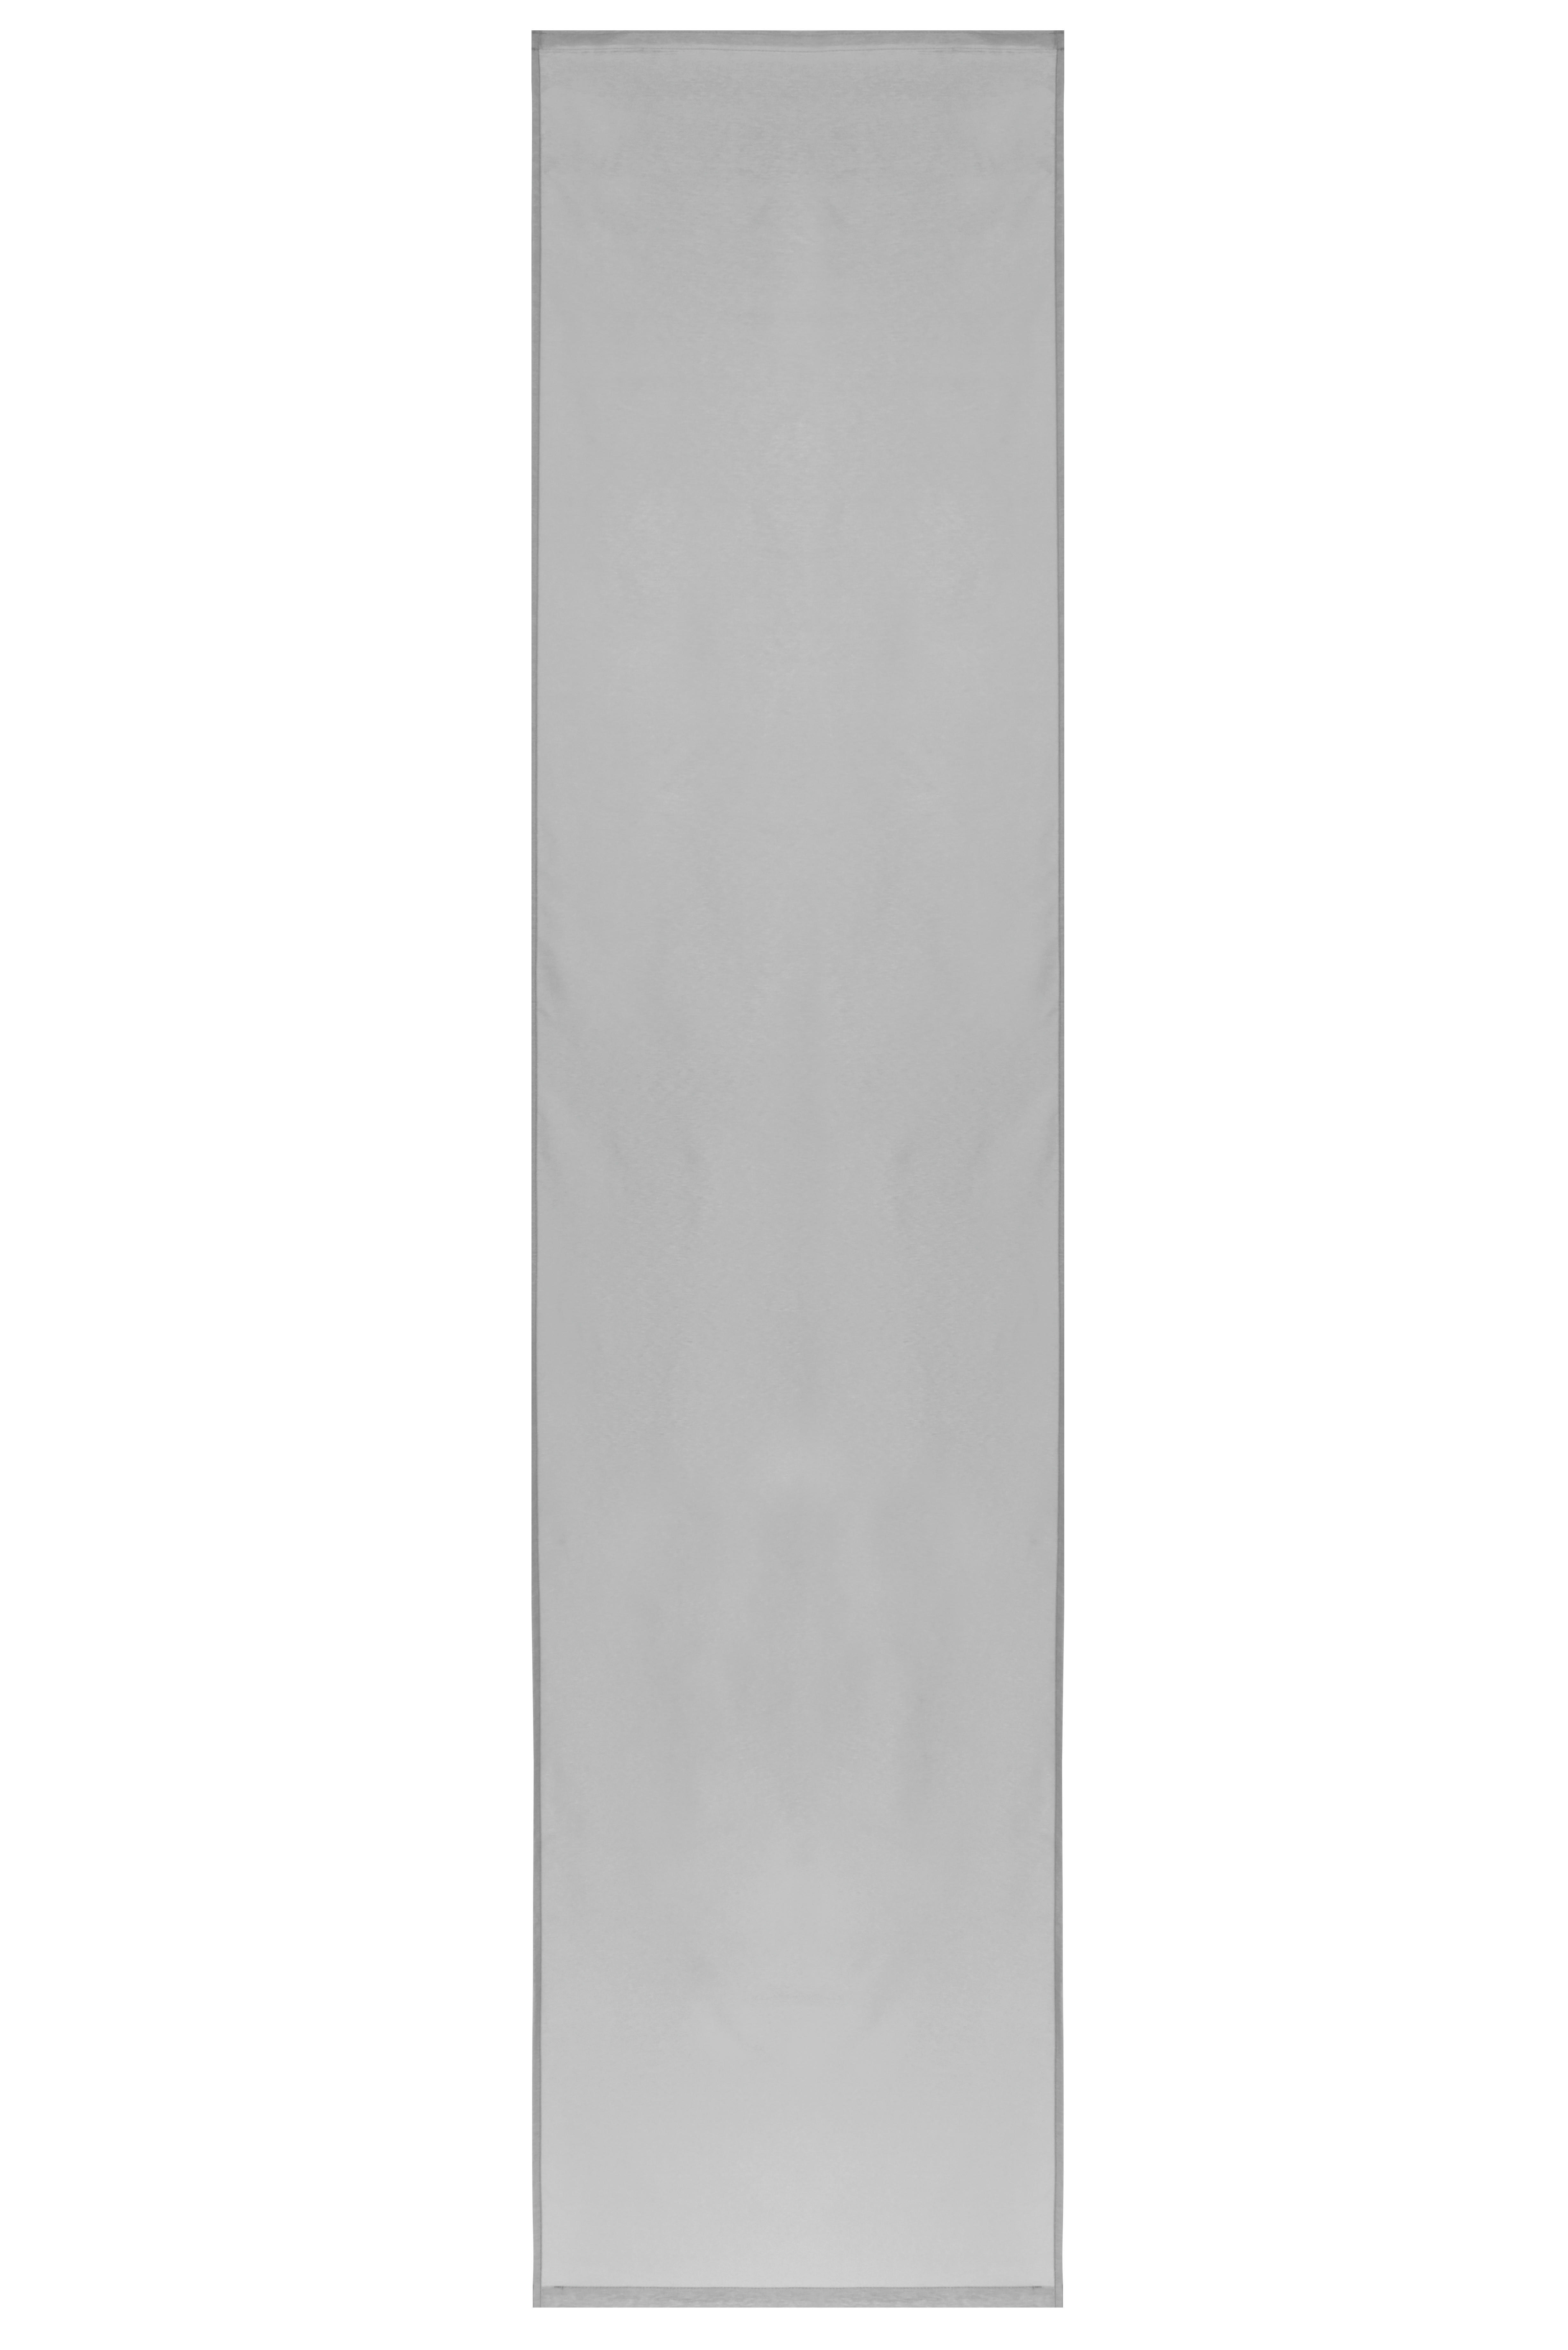 Schiebevorhang Pearl grau B/L: ca. 60x245 cm Pearl - grau (60,00/245,00cm)